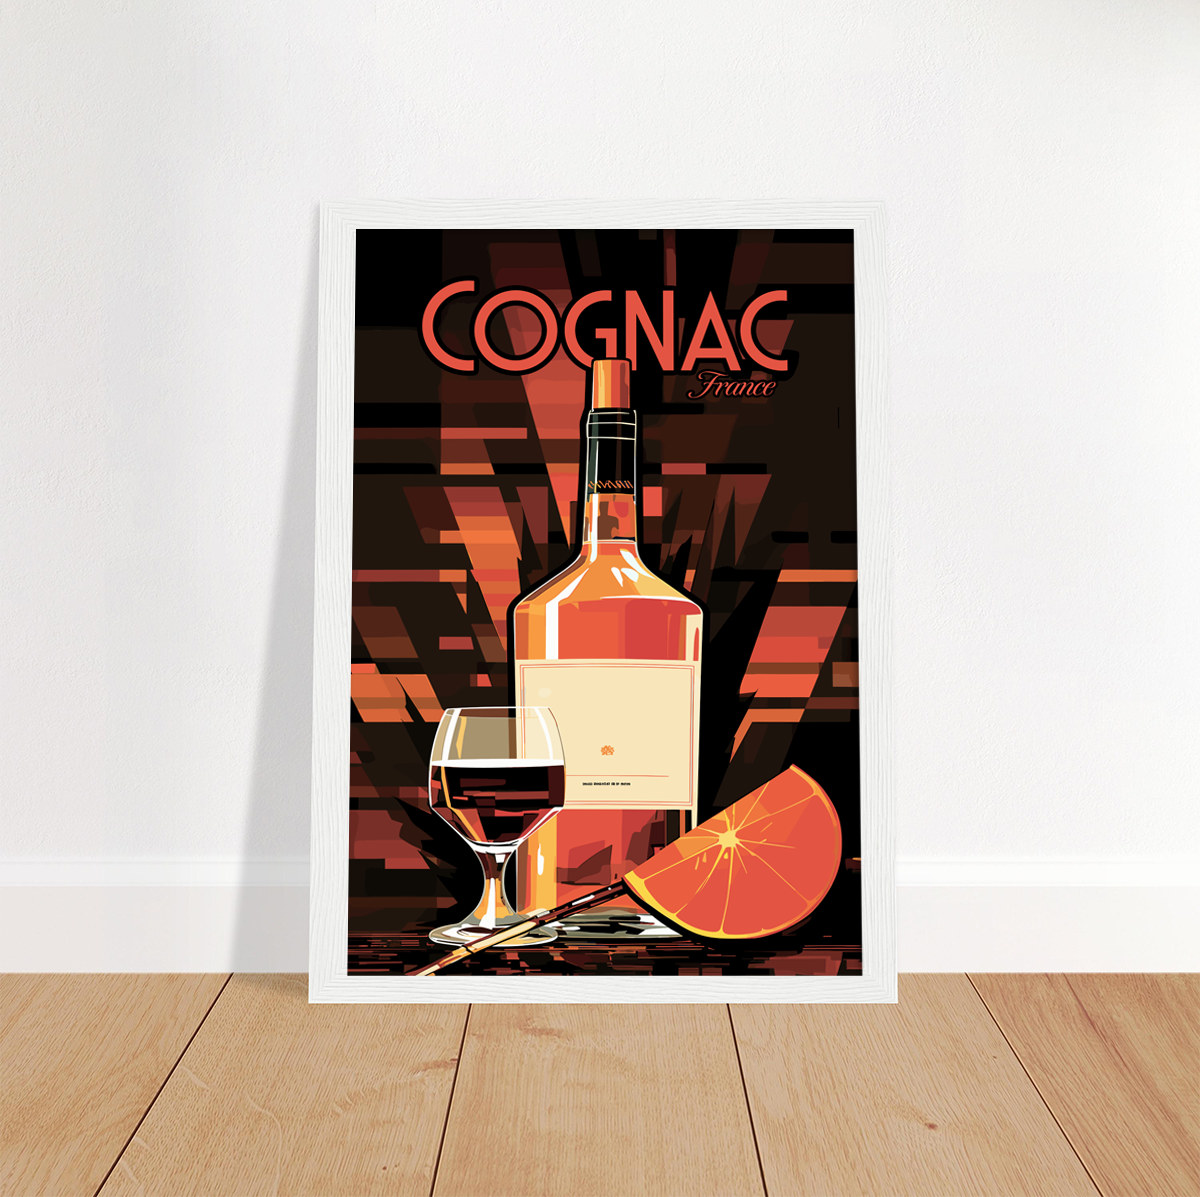 Cognac poster by bon voyage design